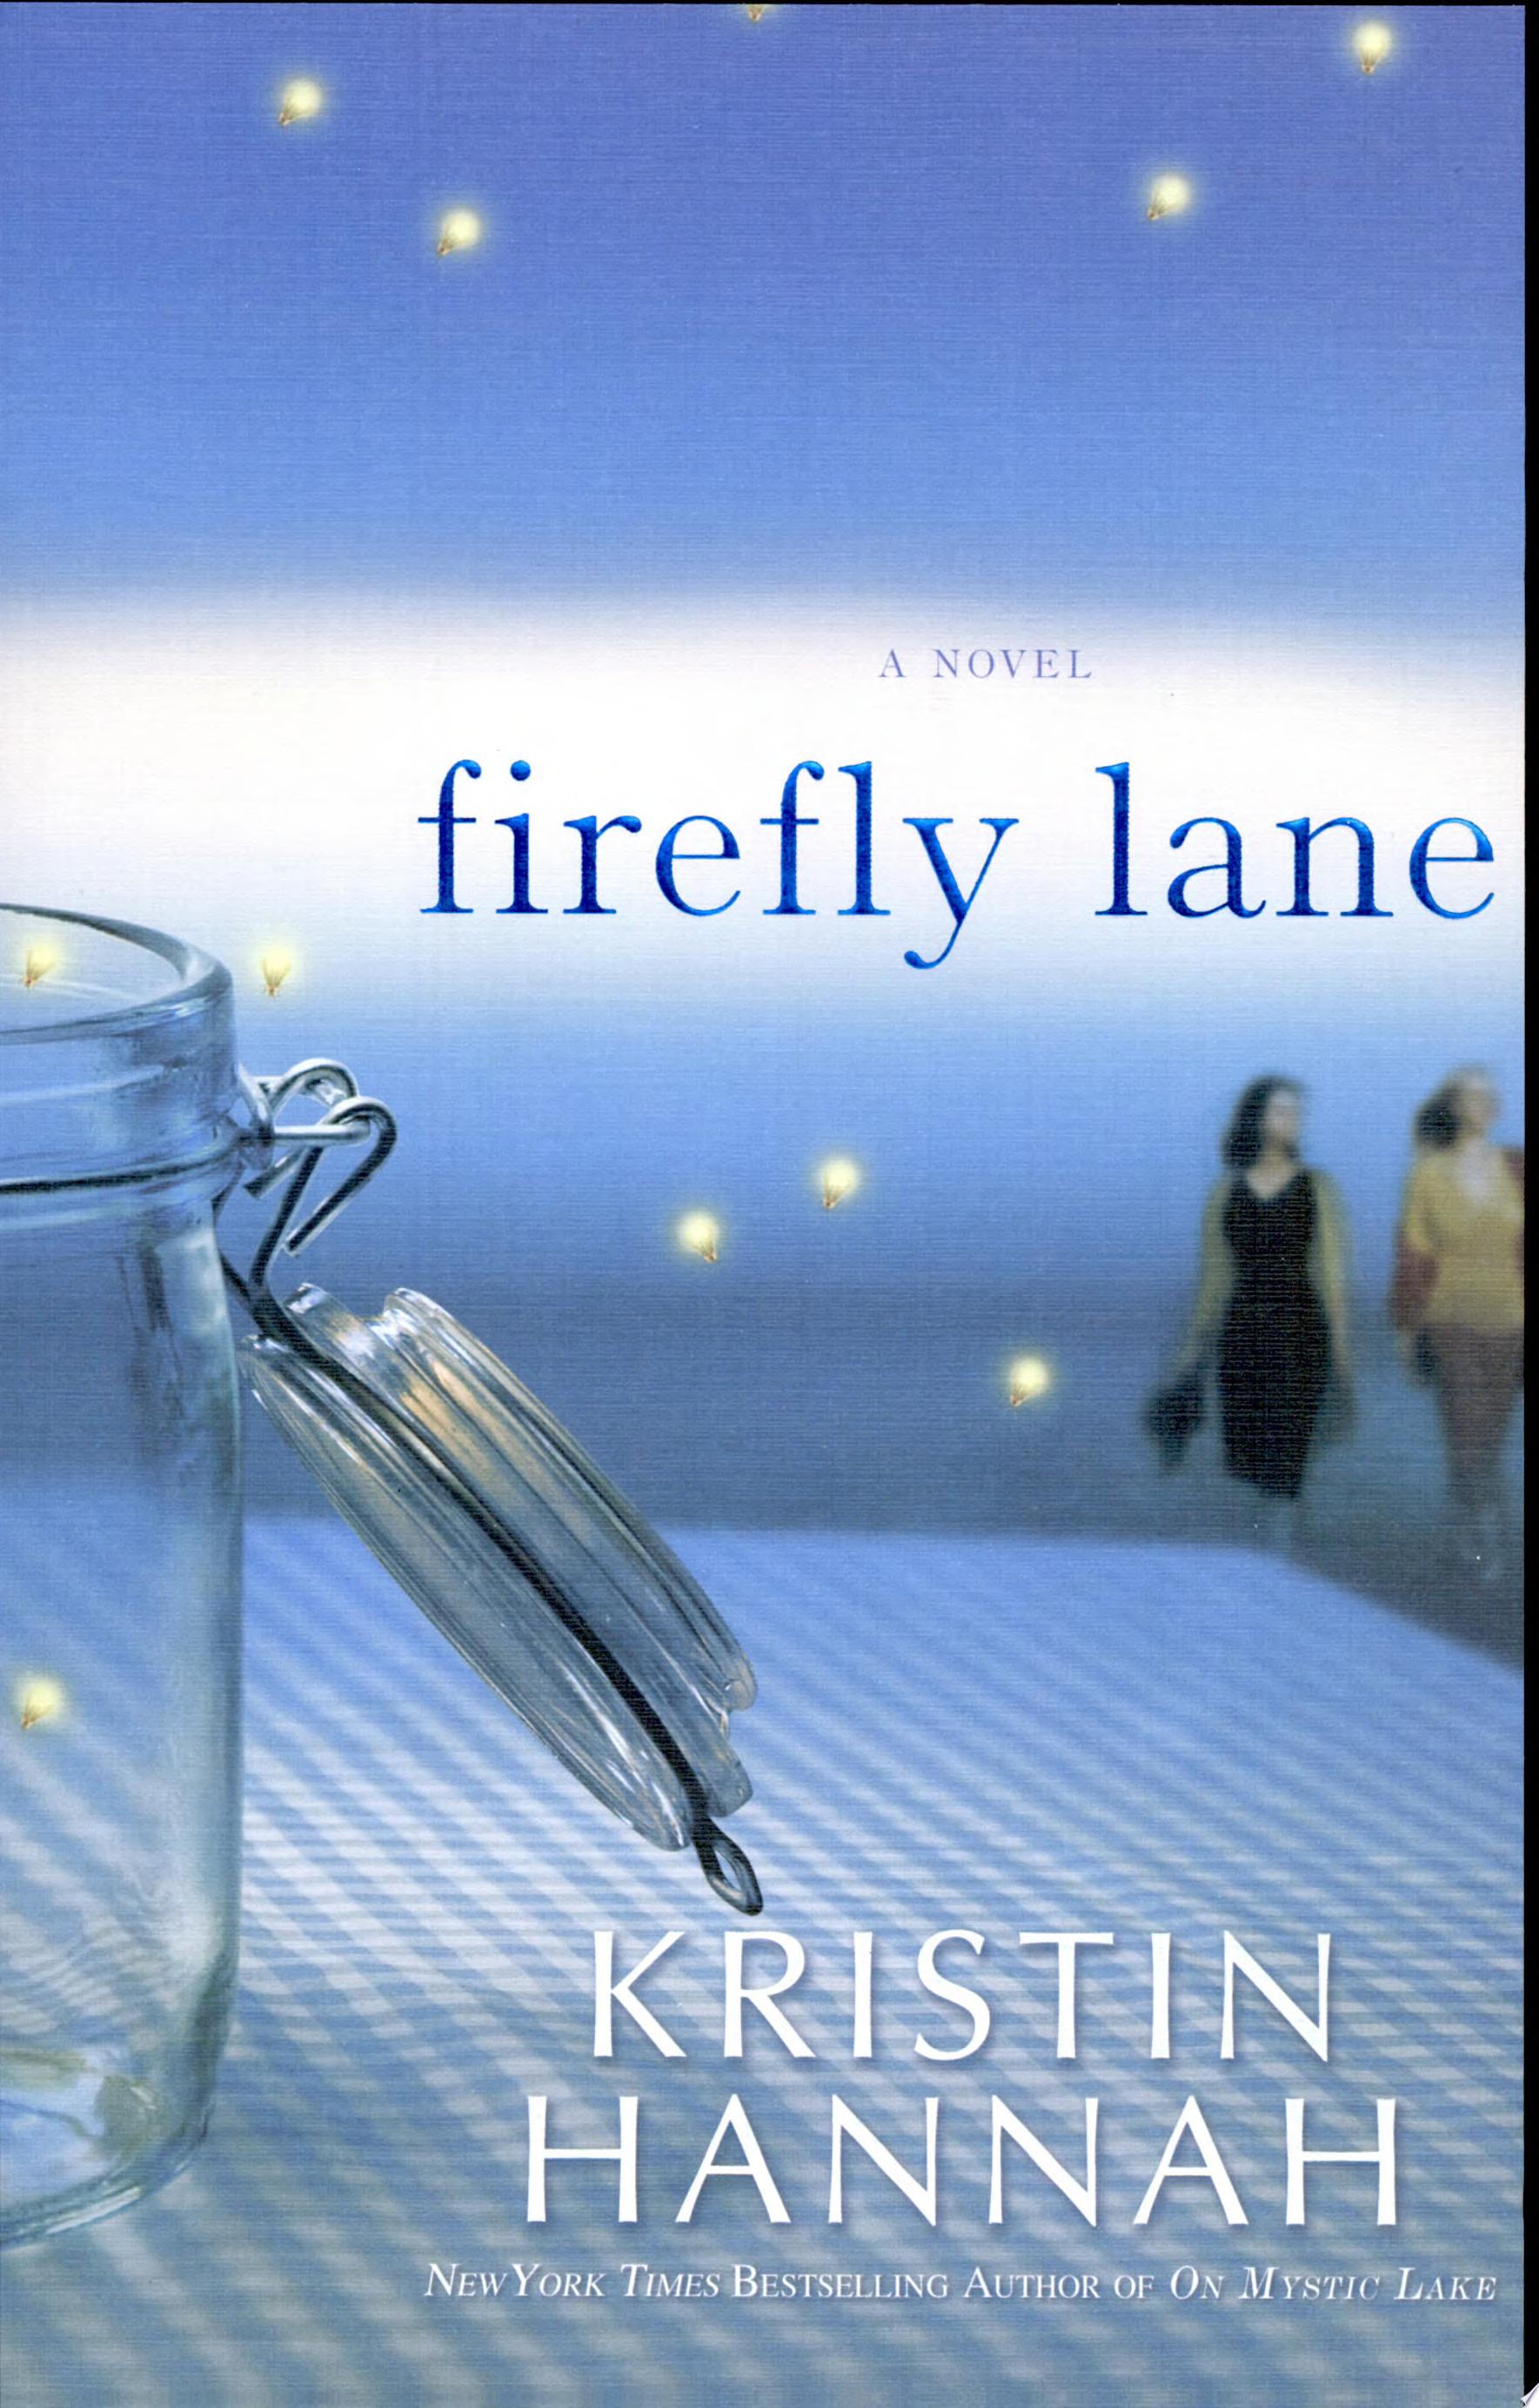 Image for "Firefly Lane"